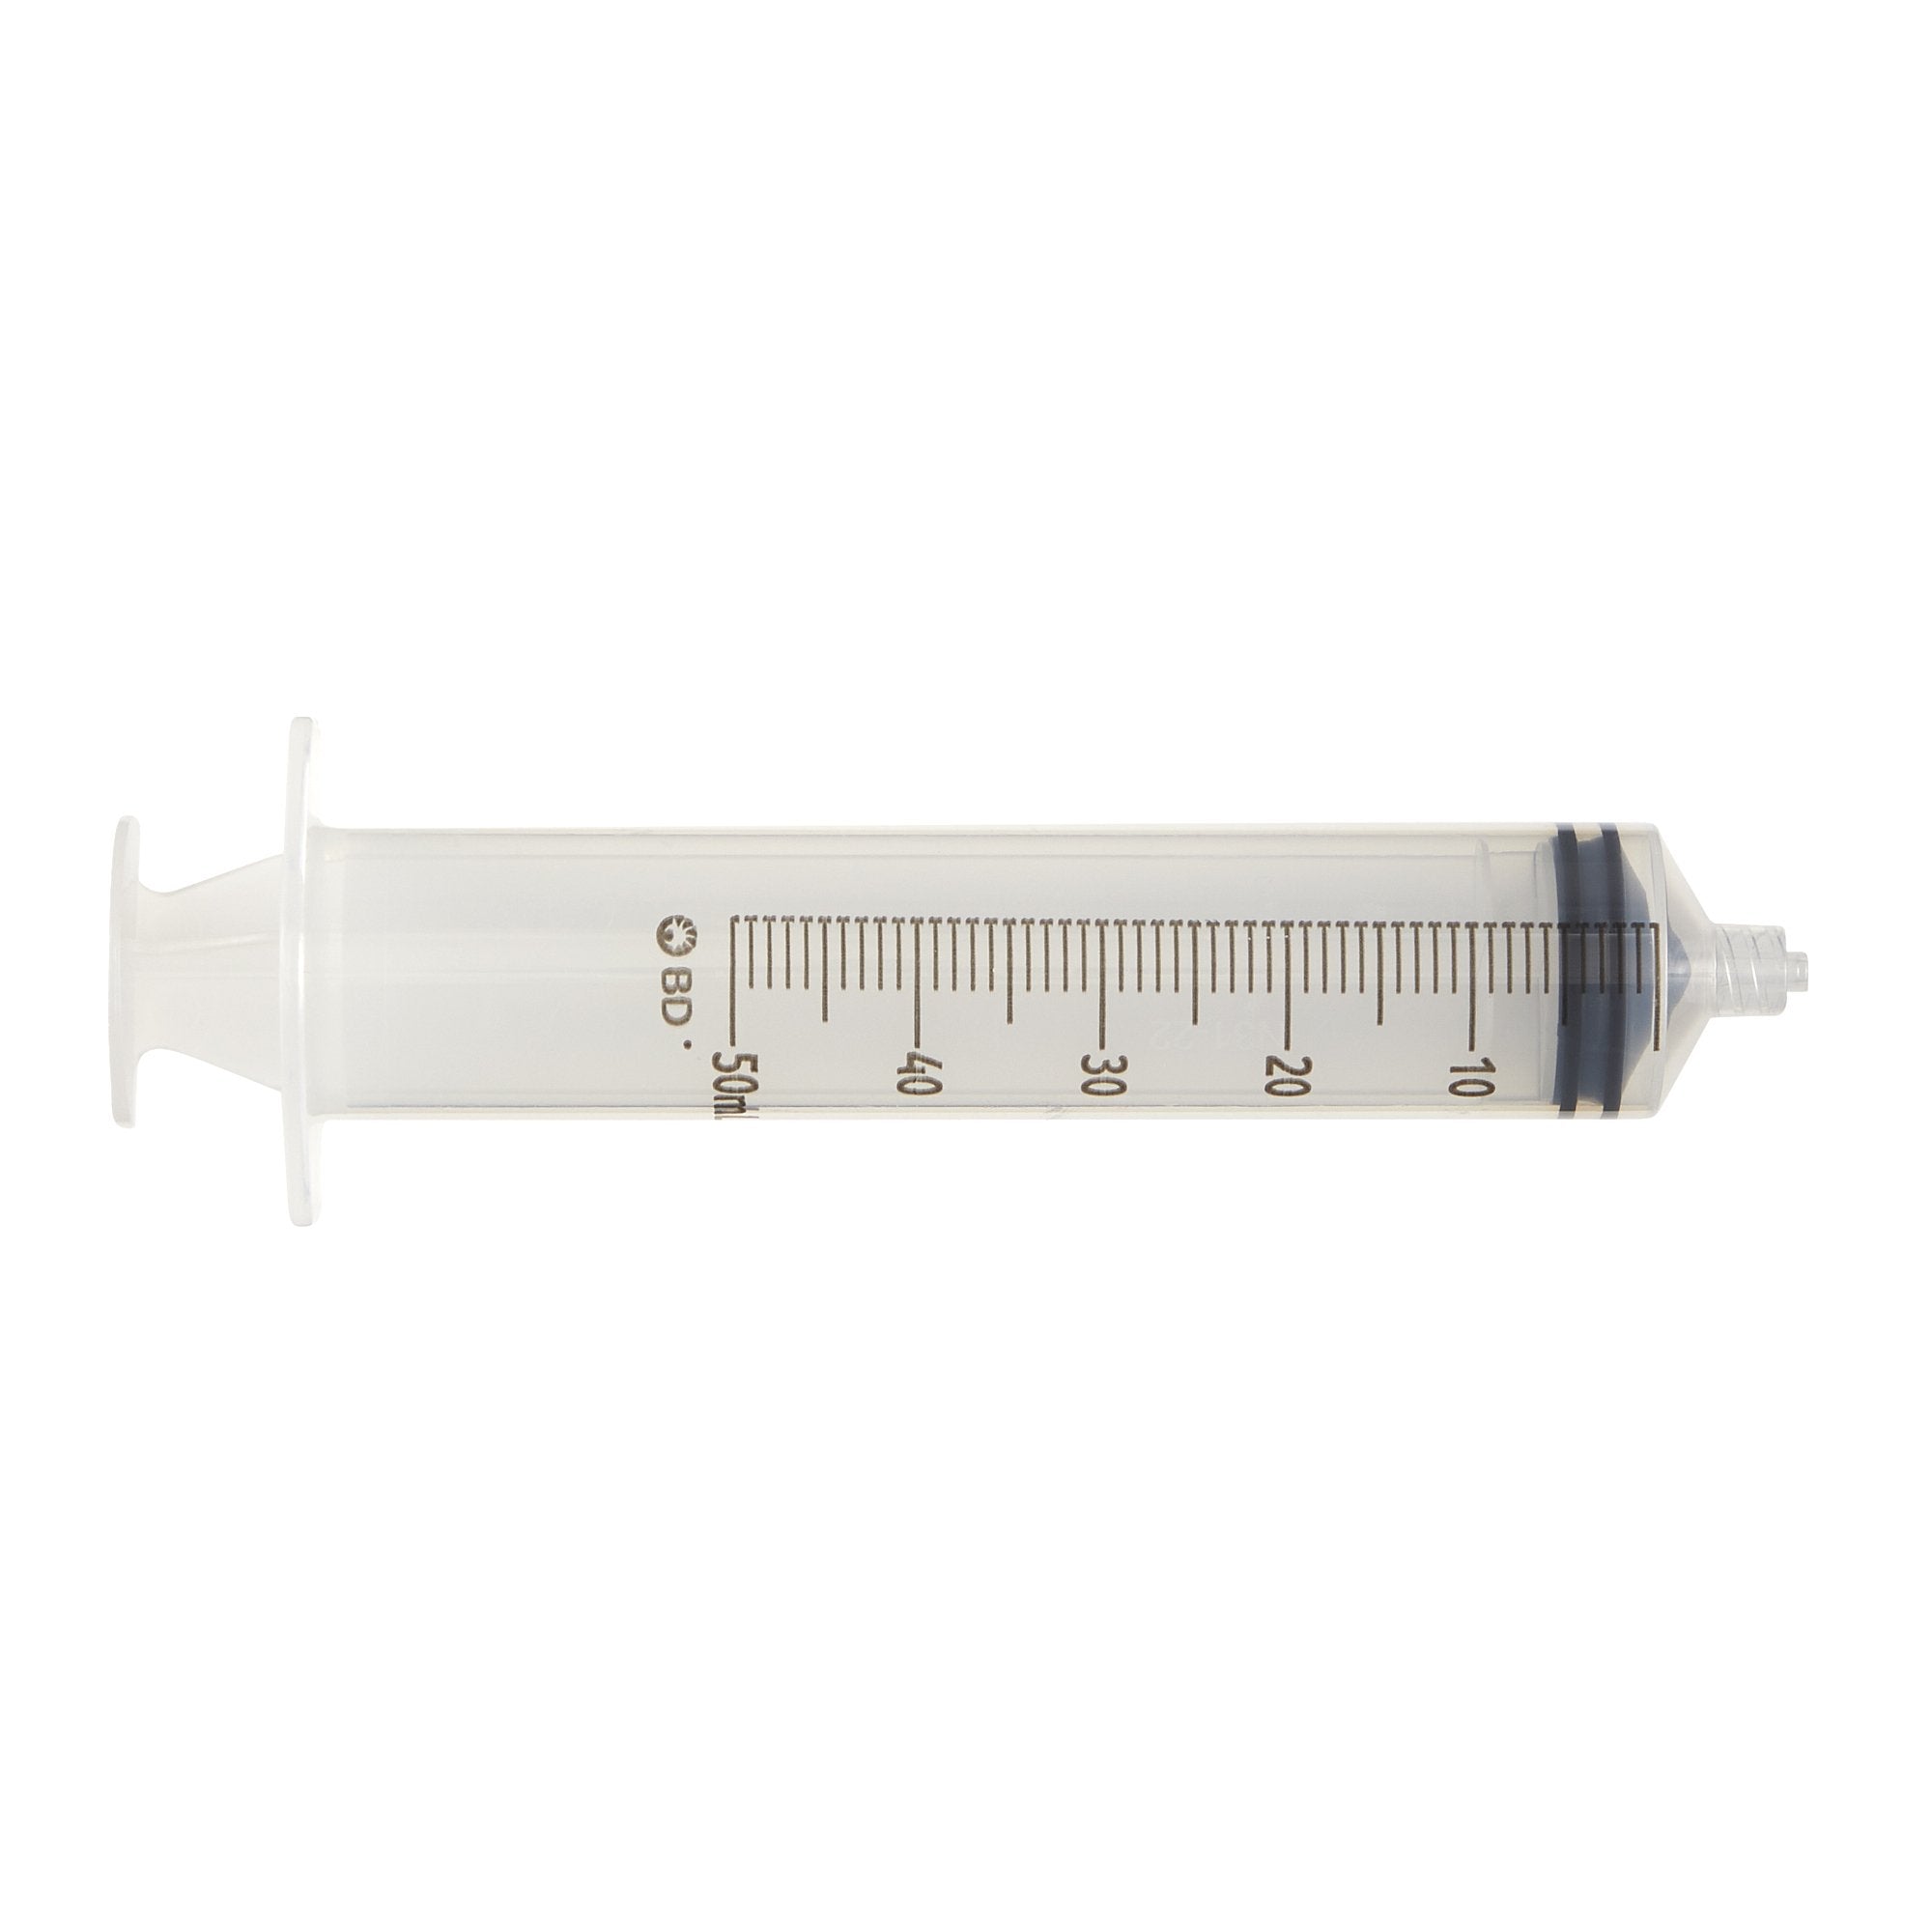 BD™ 50 cc Irrigation Syringe